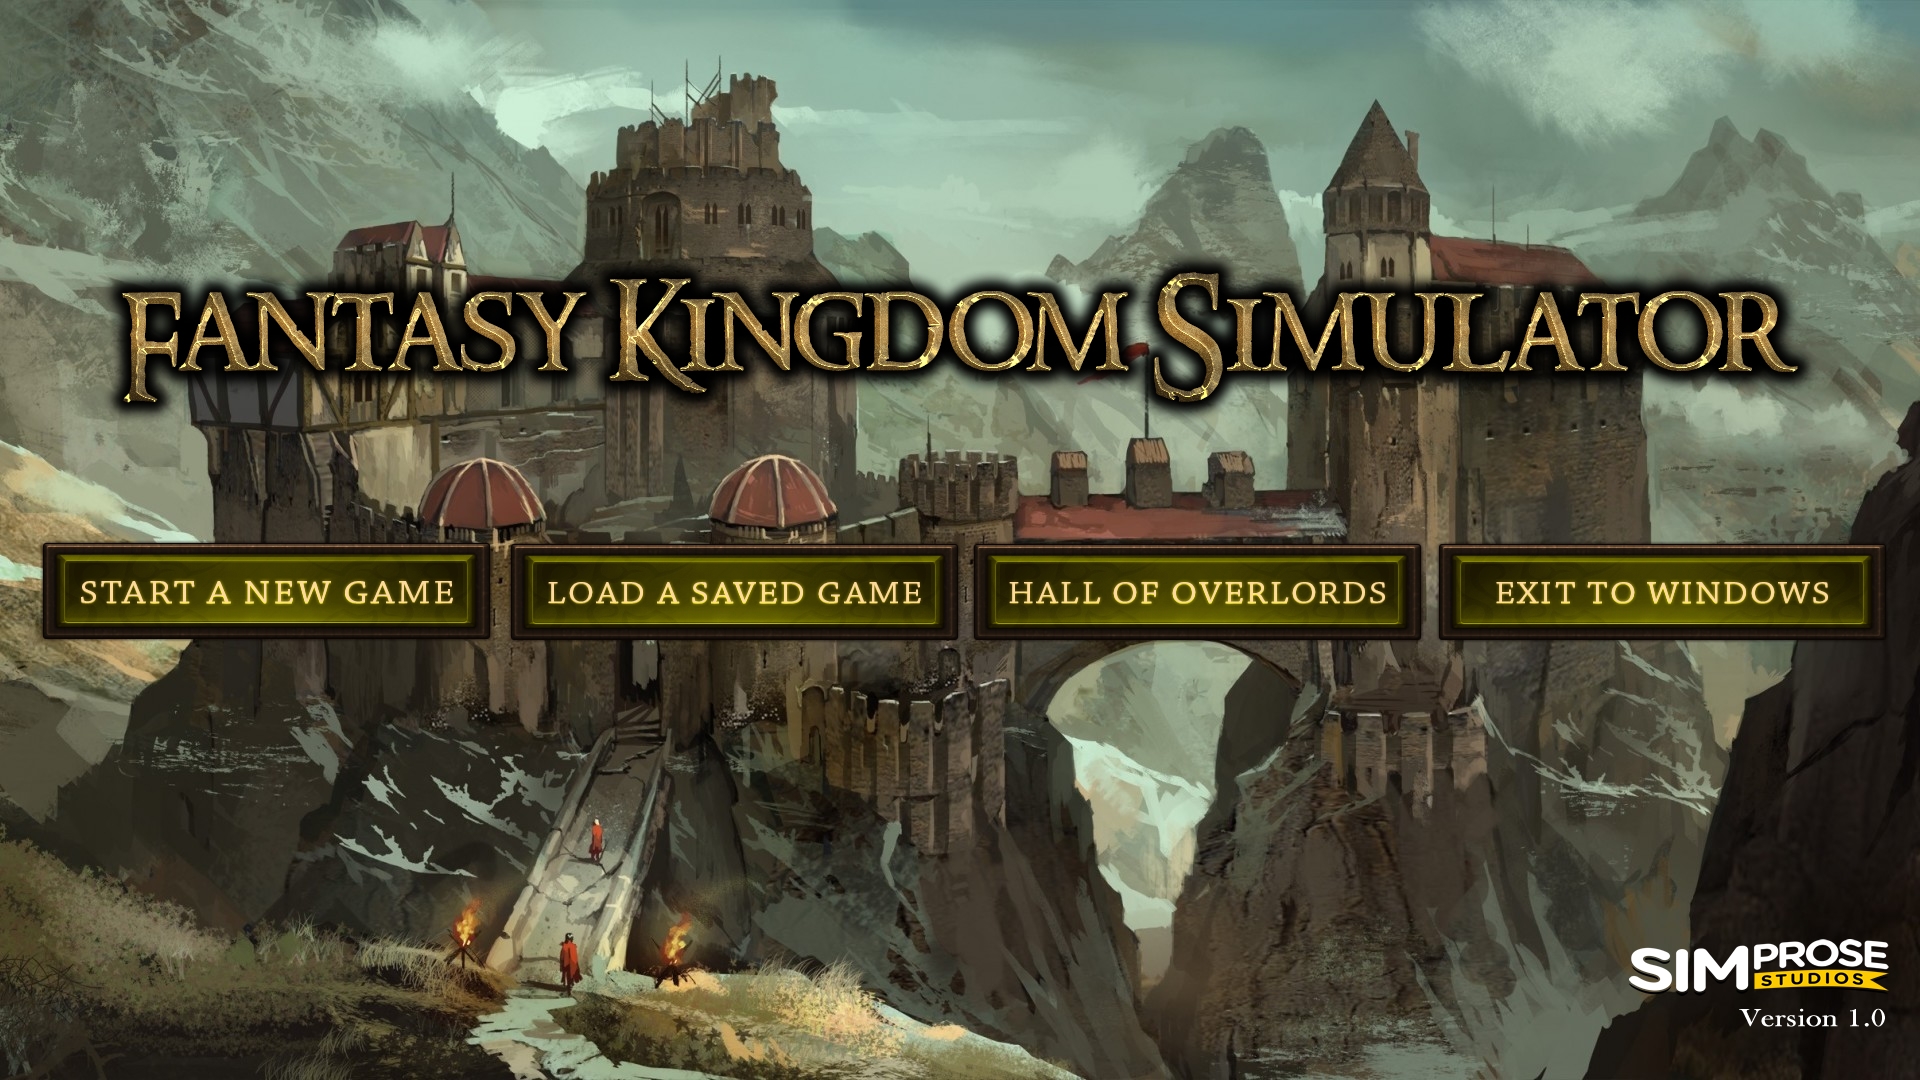 Fantasy Kingdom Simulator English Language only Steam CD Key 0.33 usd